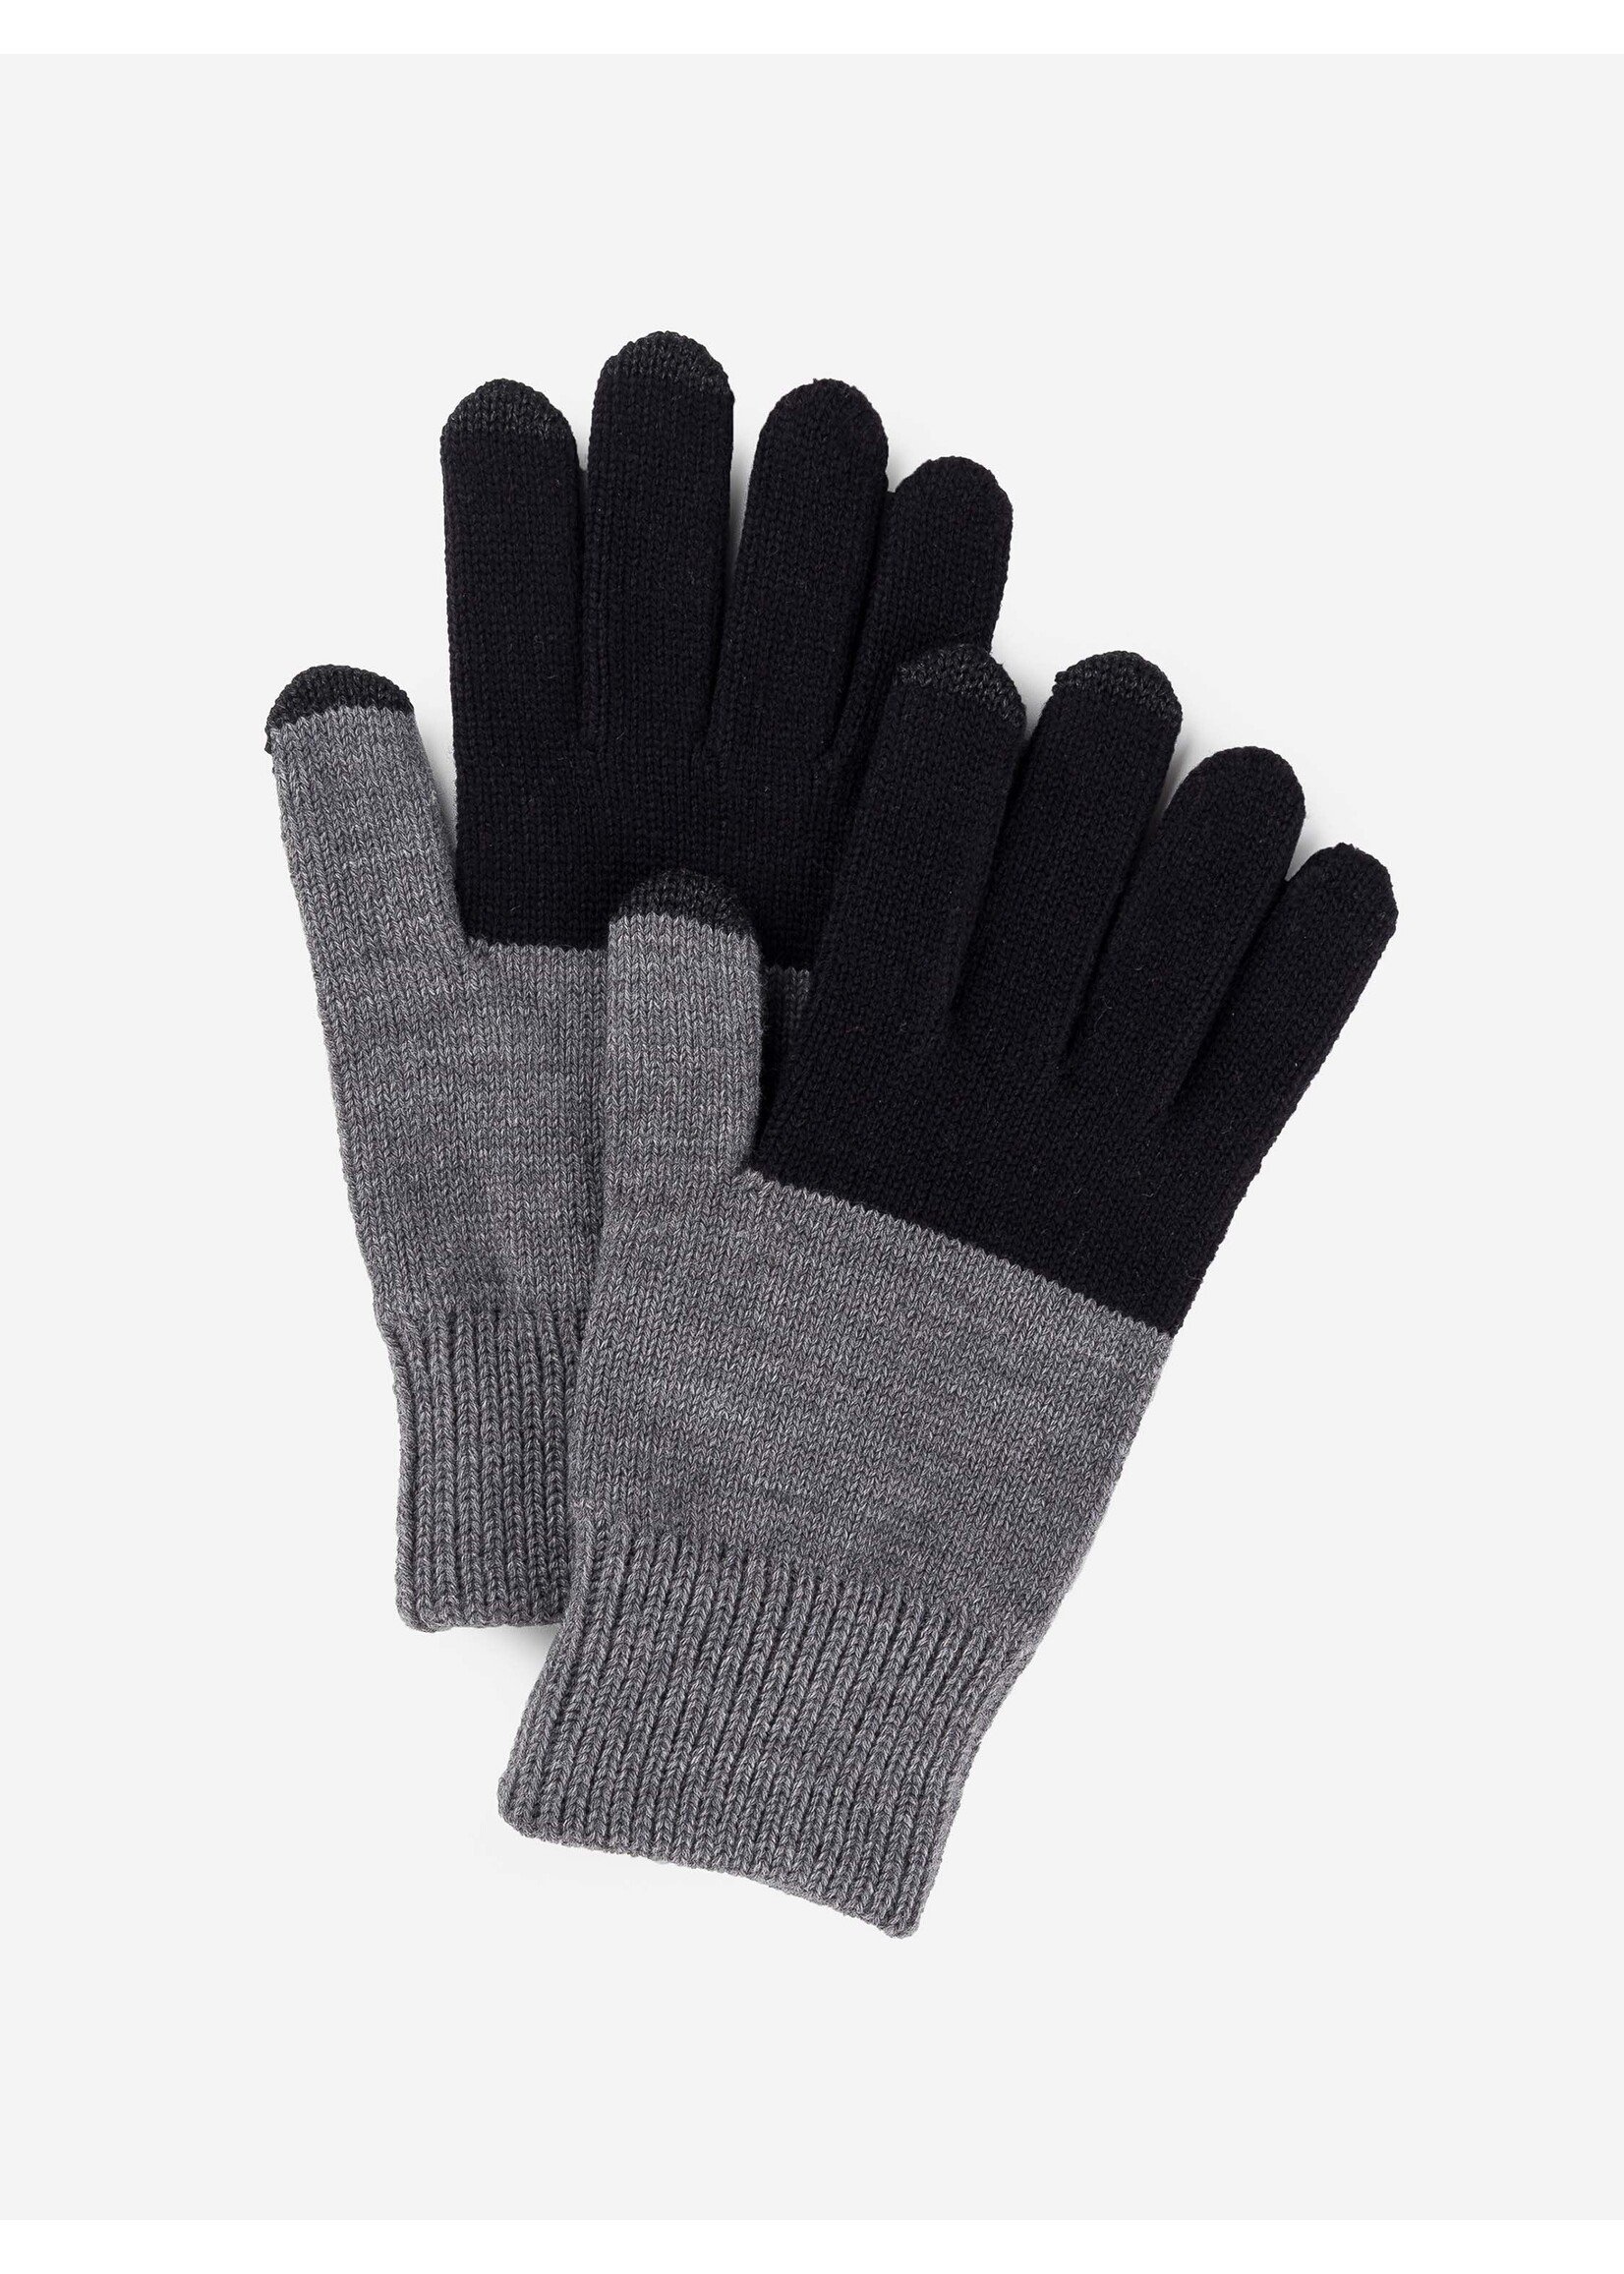 Verloop Touchscreen Gloves "Colorblock Knit" by VERLOOP